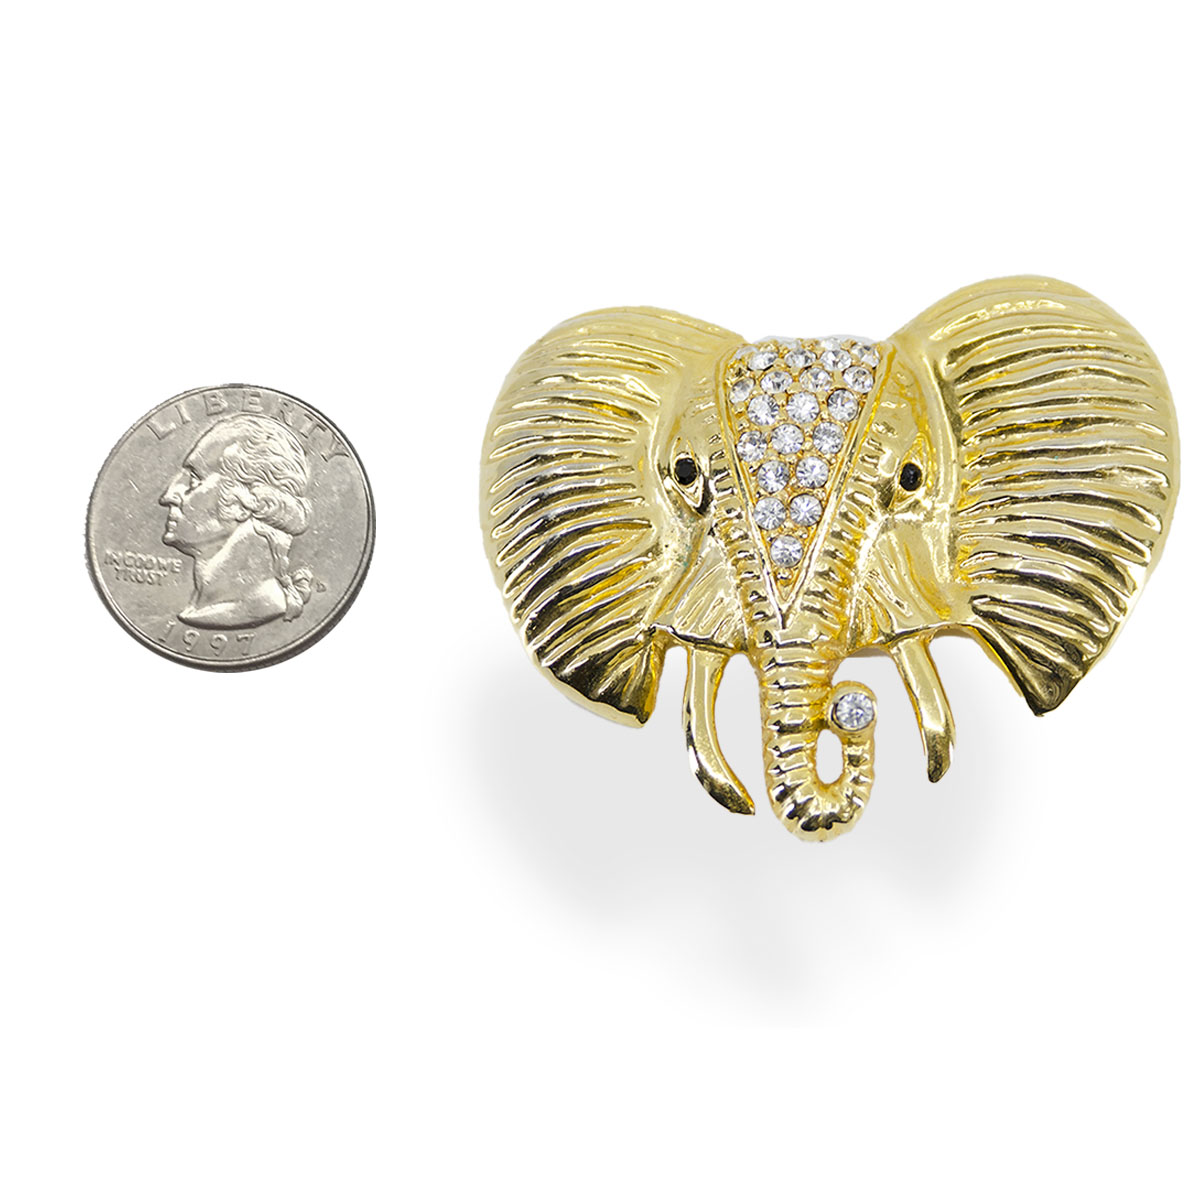 Gold elephant head brooch